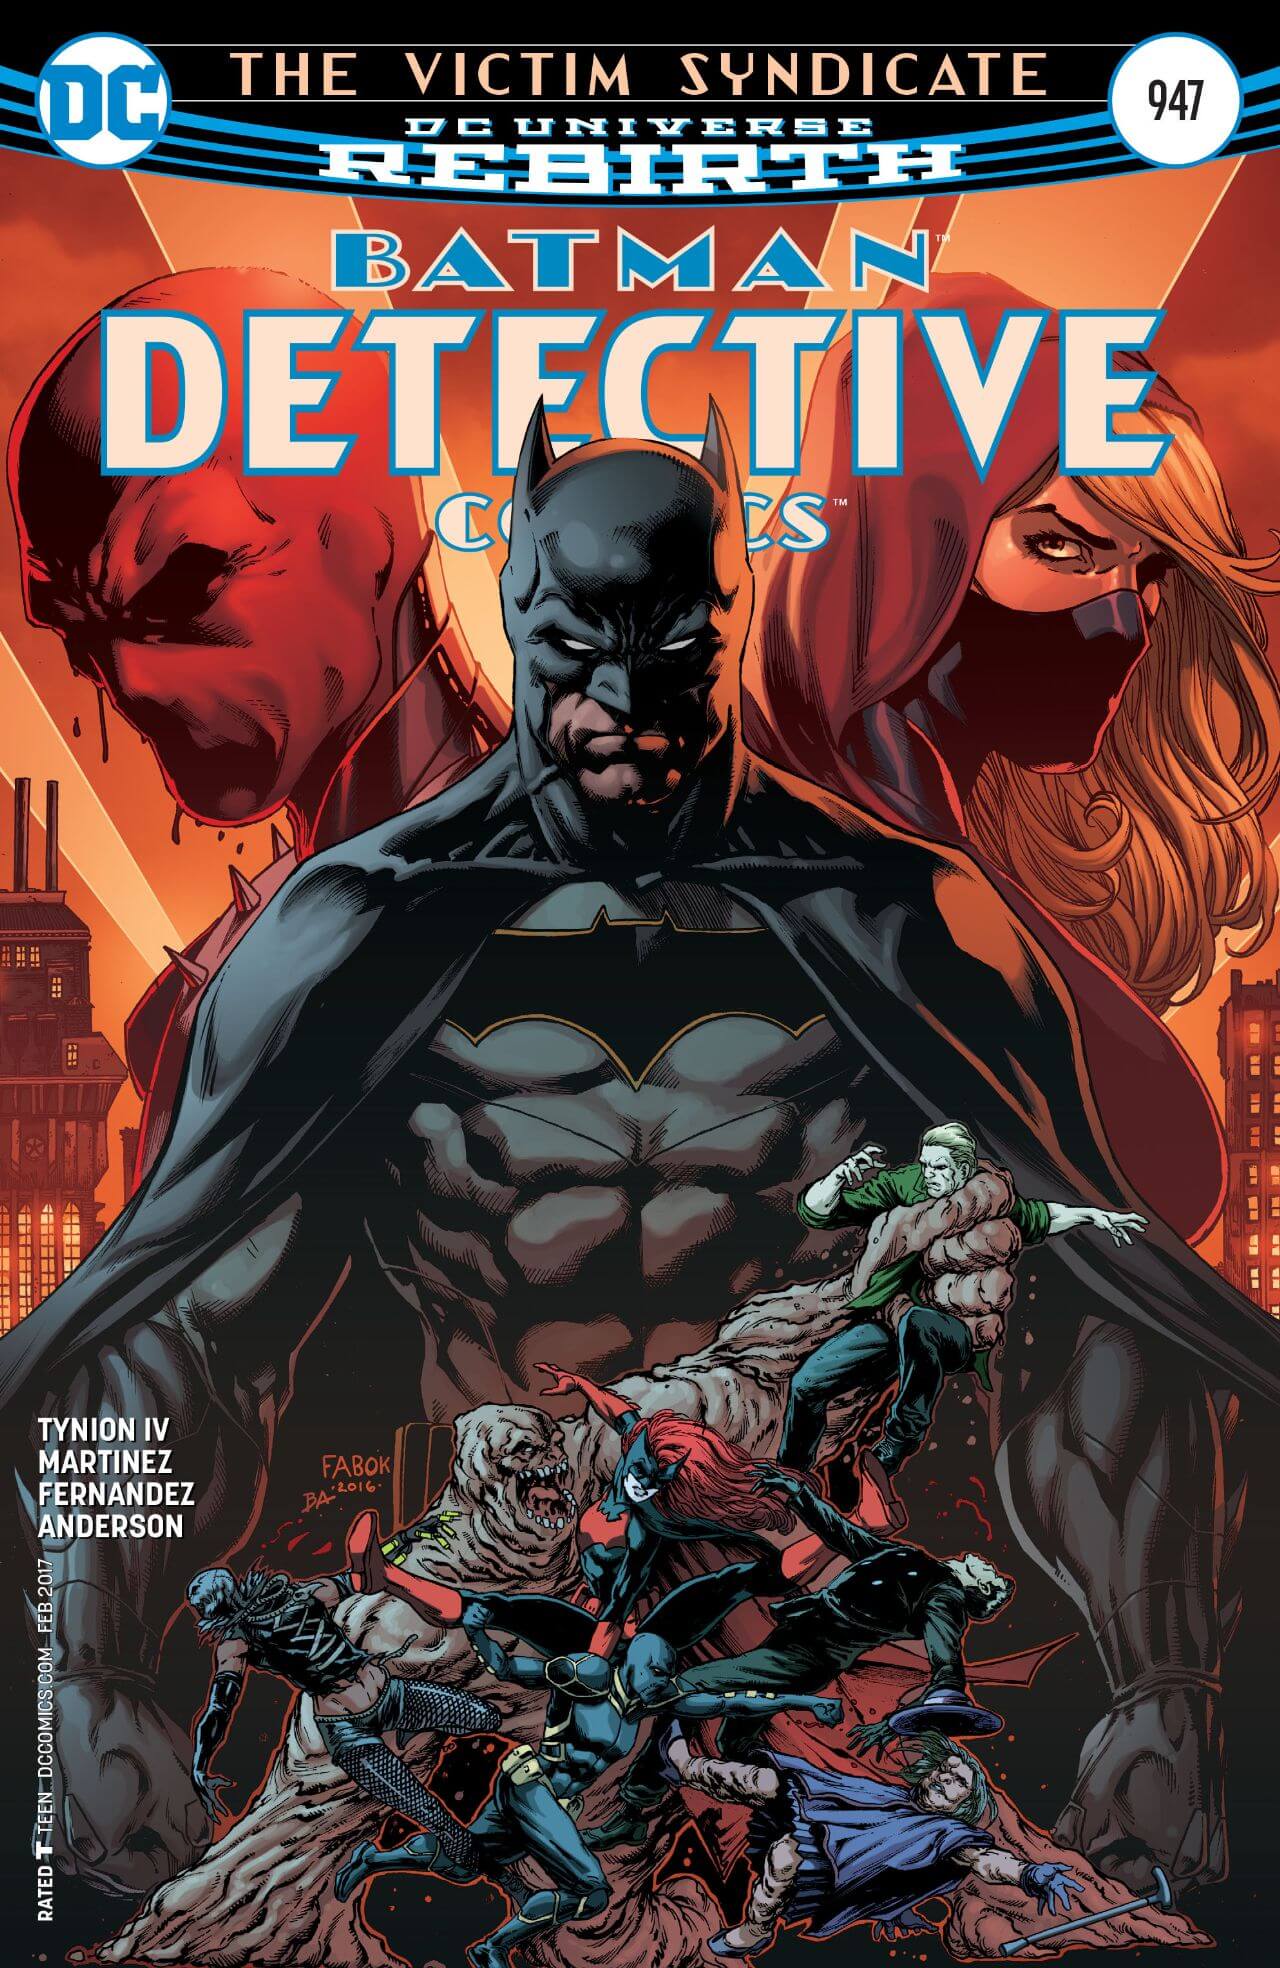 Batman Detective Comics 947 DC 2016 Victim Syndicate